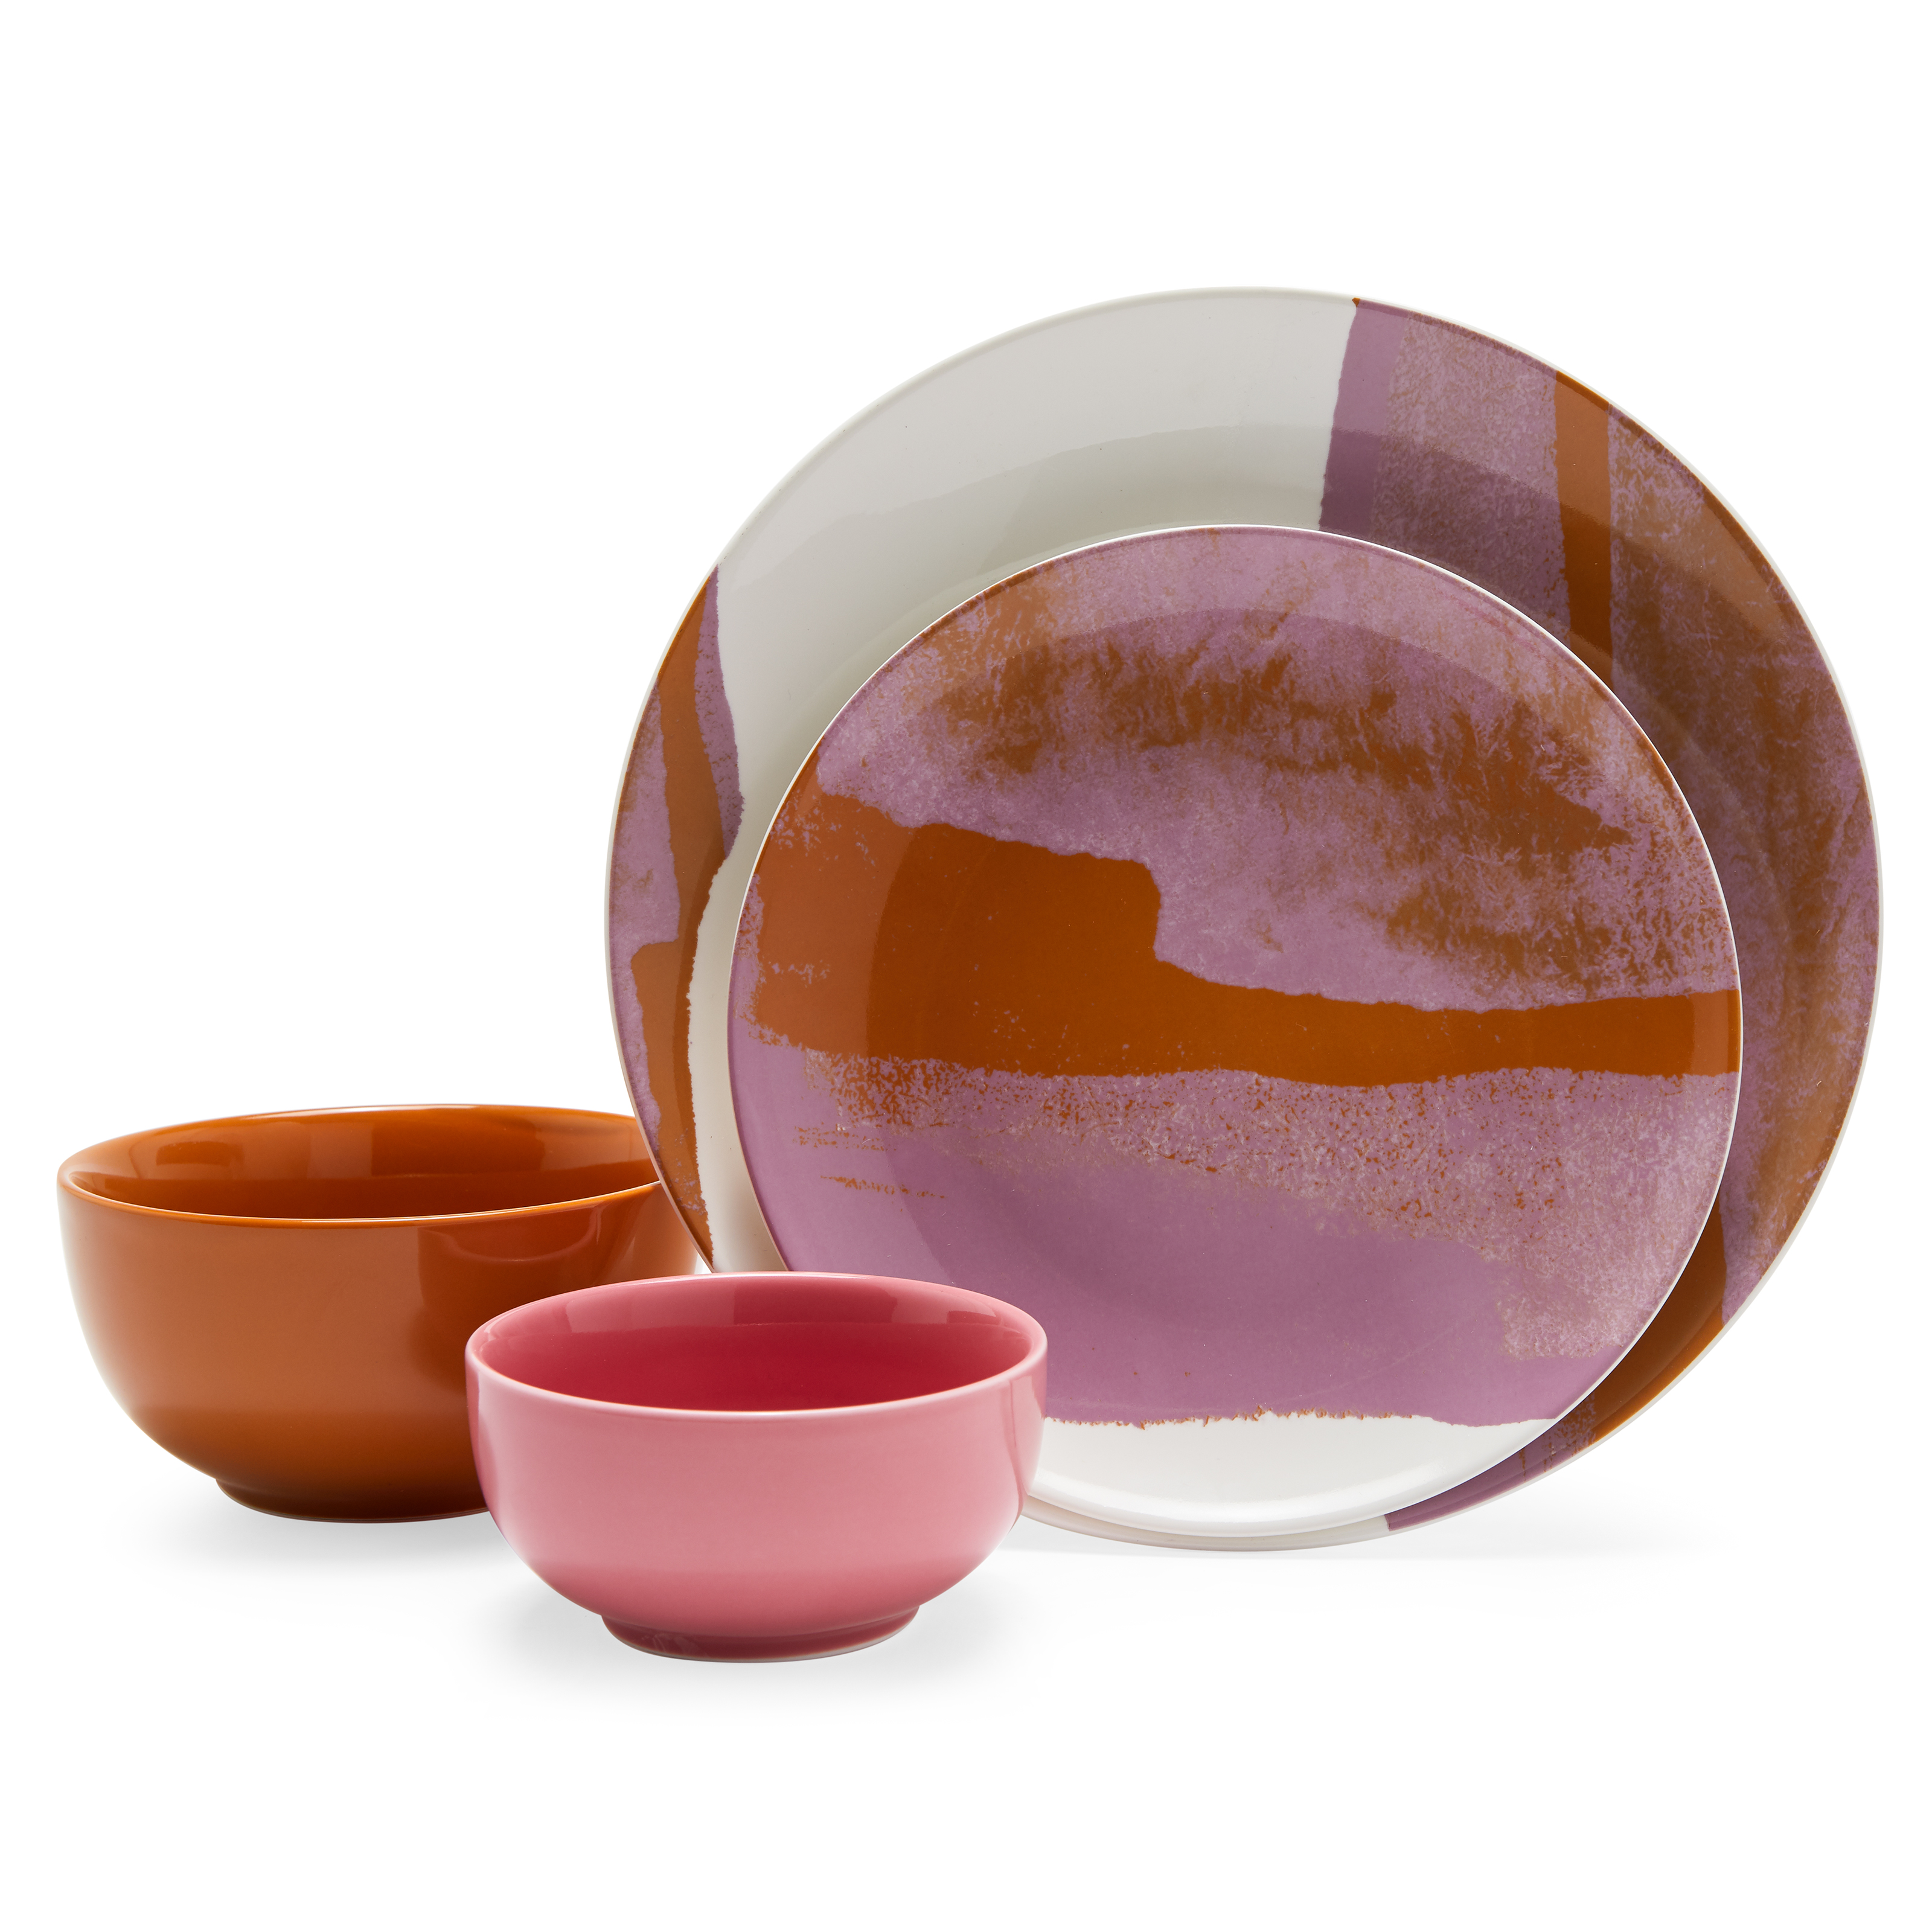 Vintage Marble 16 Piece Dinnerware Set, Palm Springs Pink by Drew Barrymore Flower Home - image 1 of 8